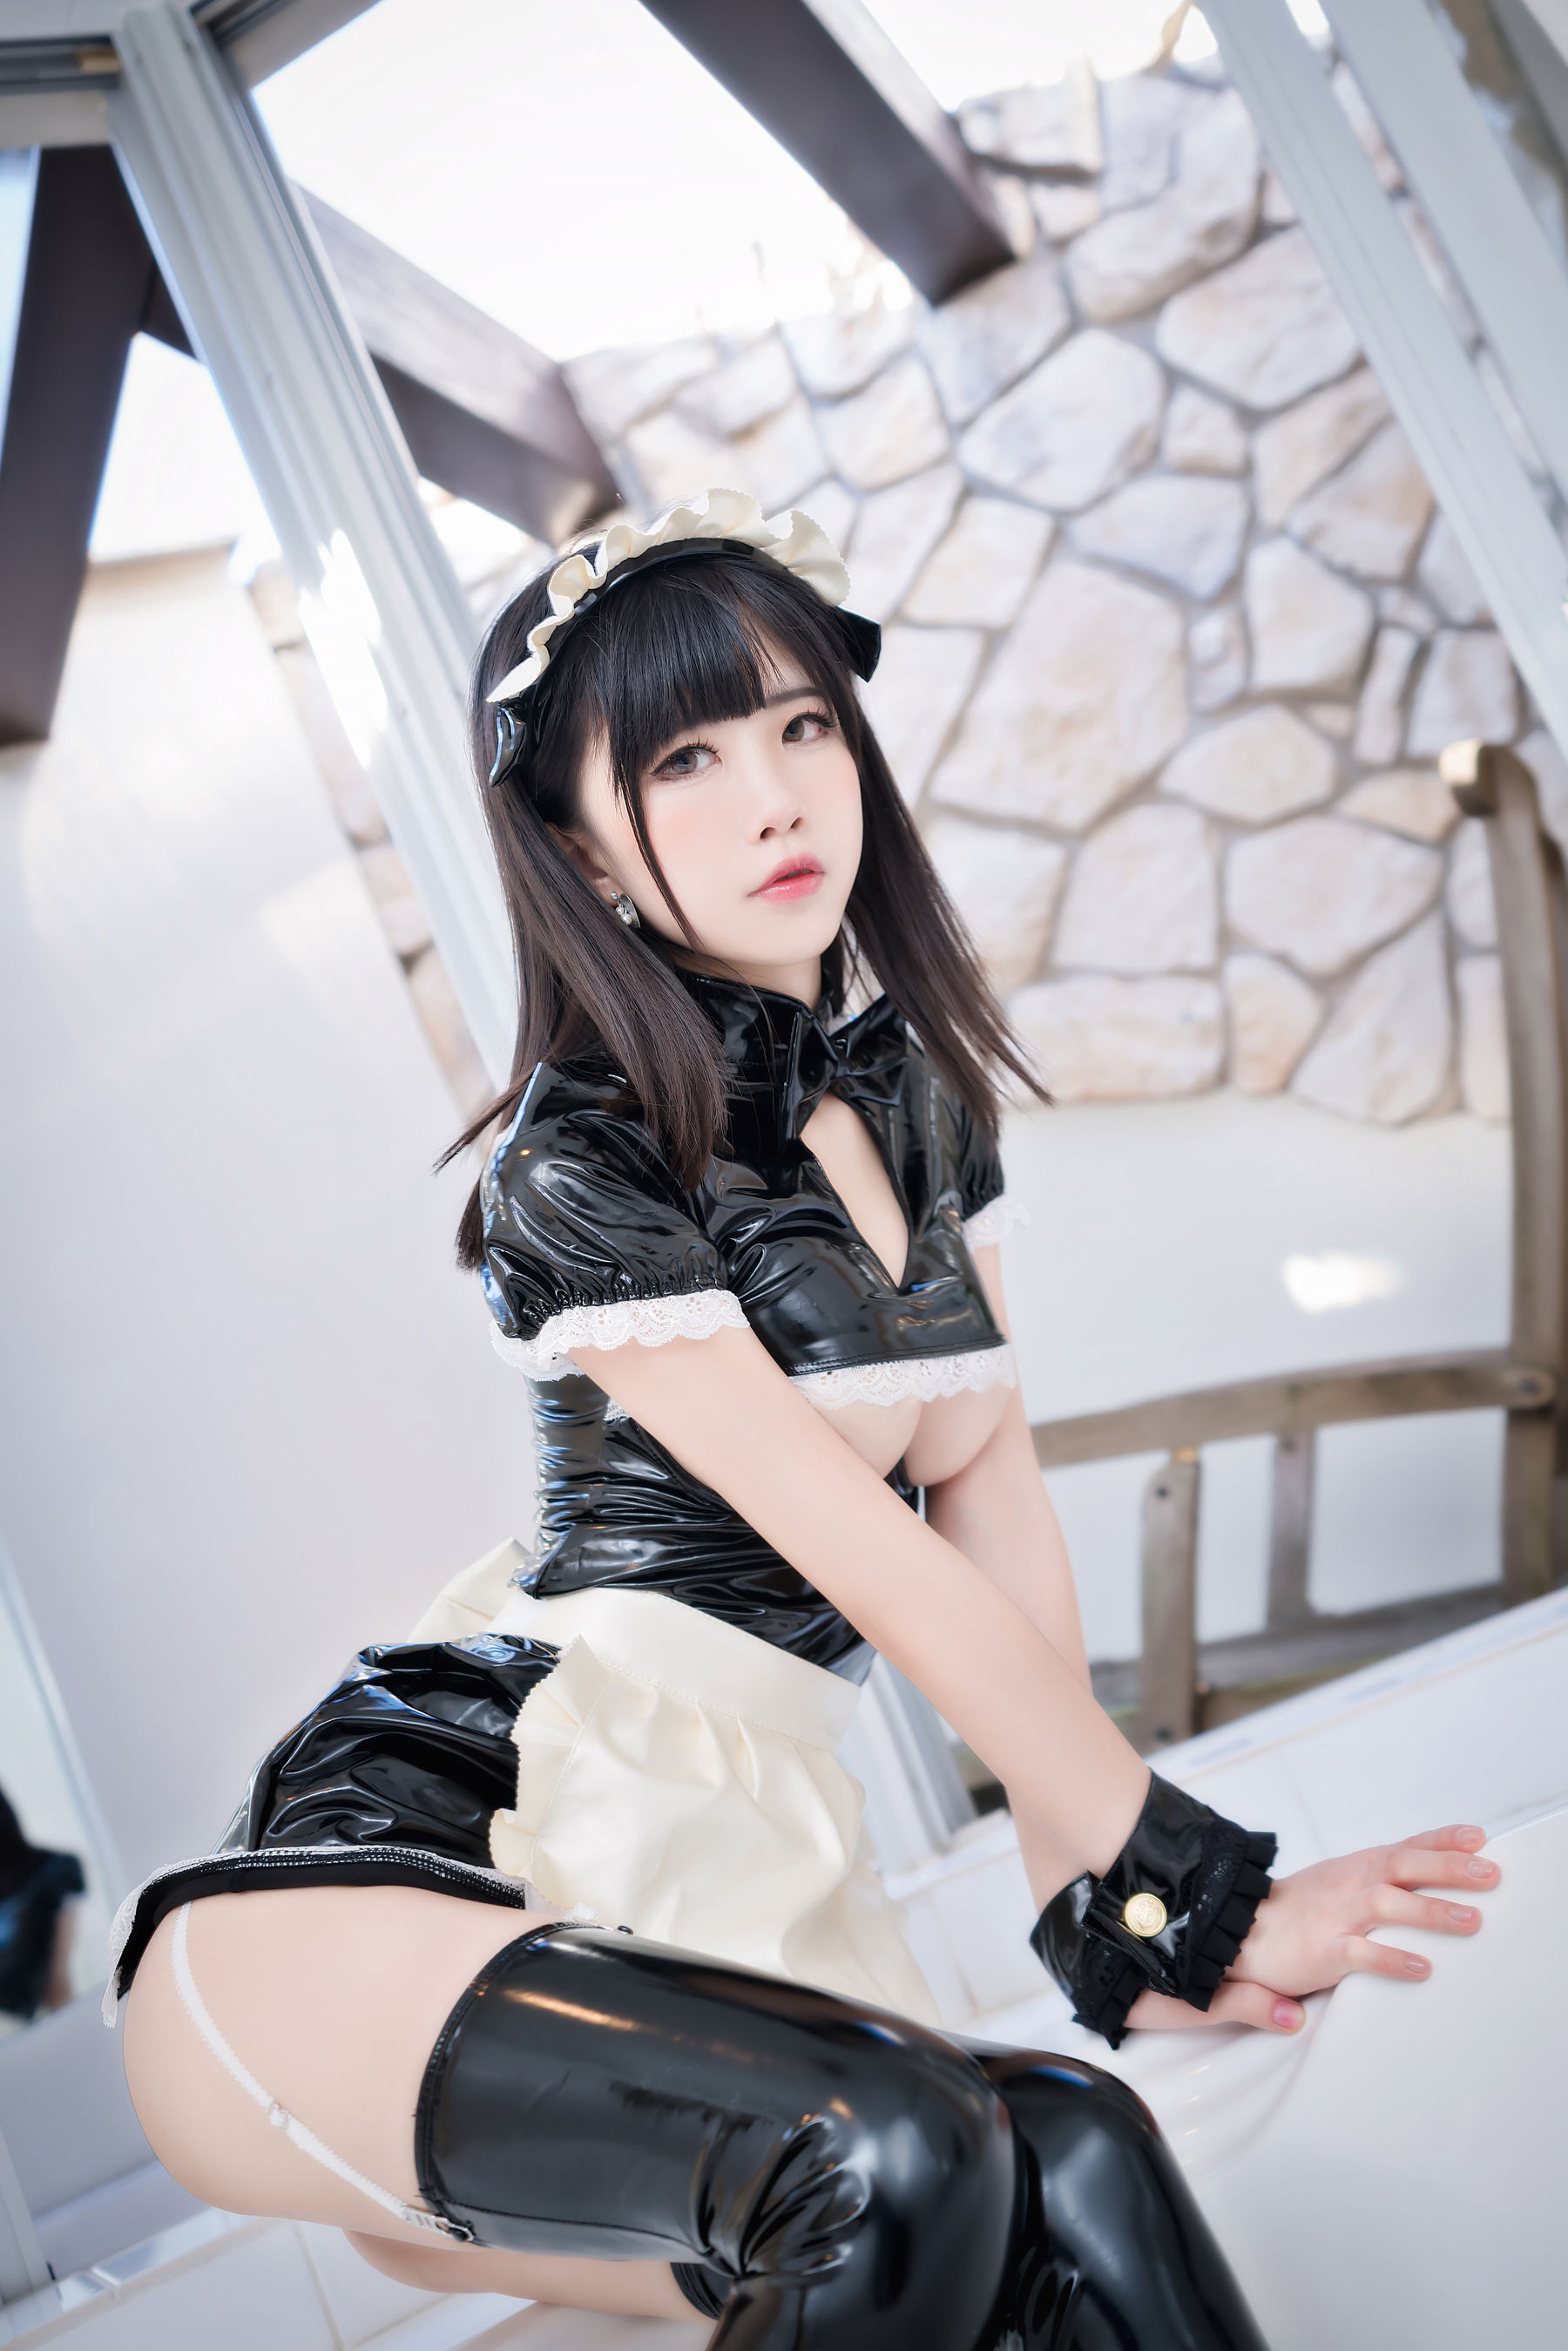 [COS welfare] Anime blogger aqua “black rubber cloth” photo set